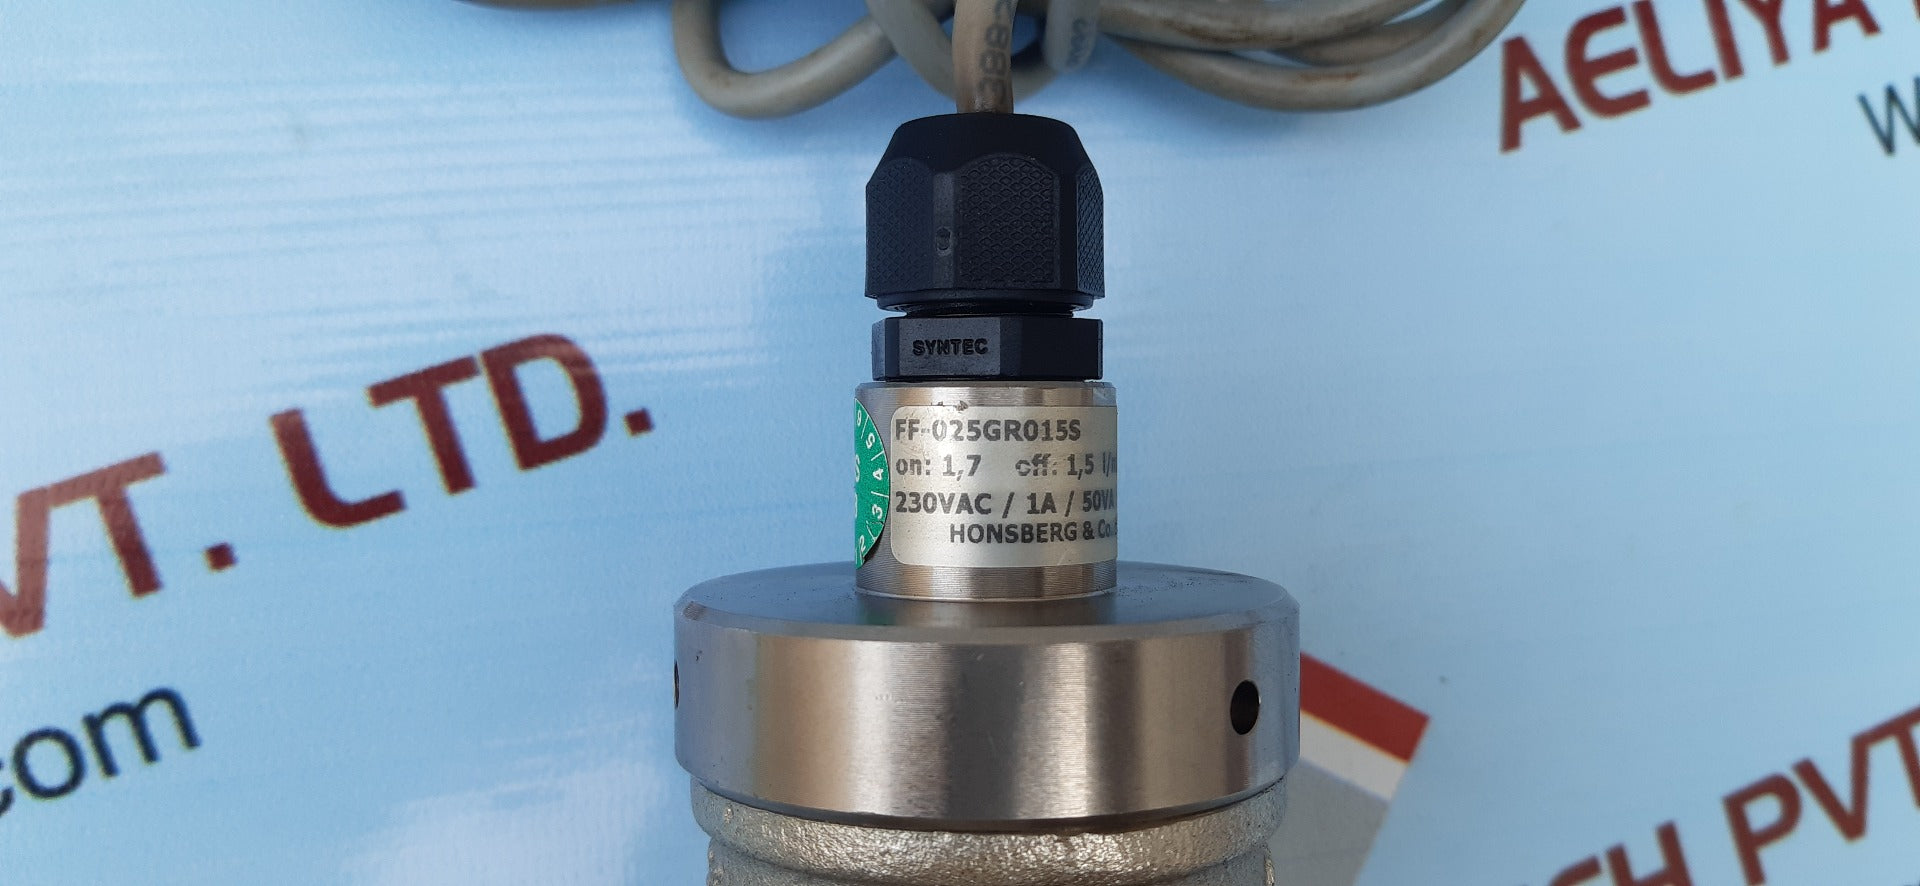 Honsberg ff-025gr0155 piston flow switch on 1.7 lpm off 1.5 lpm